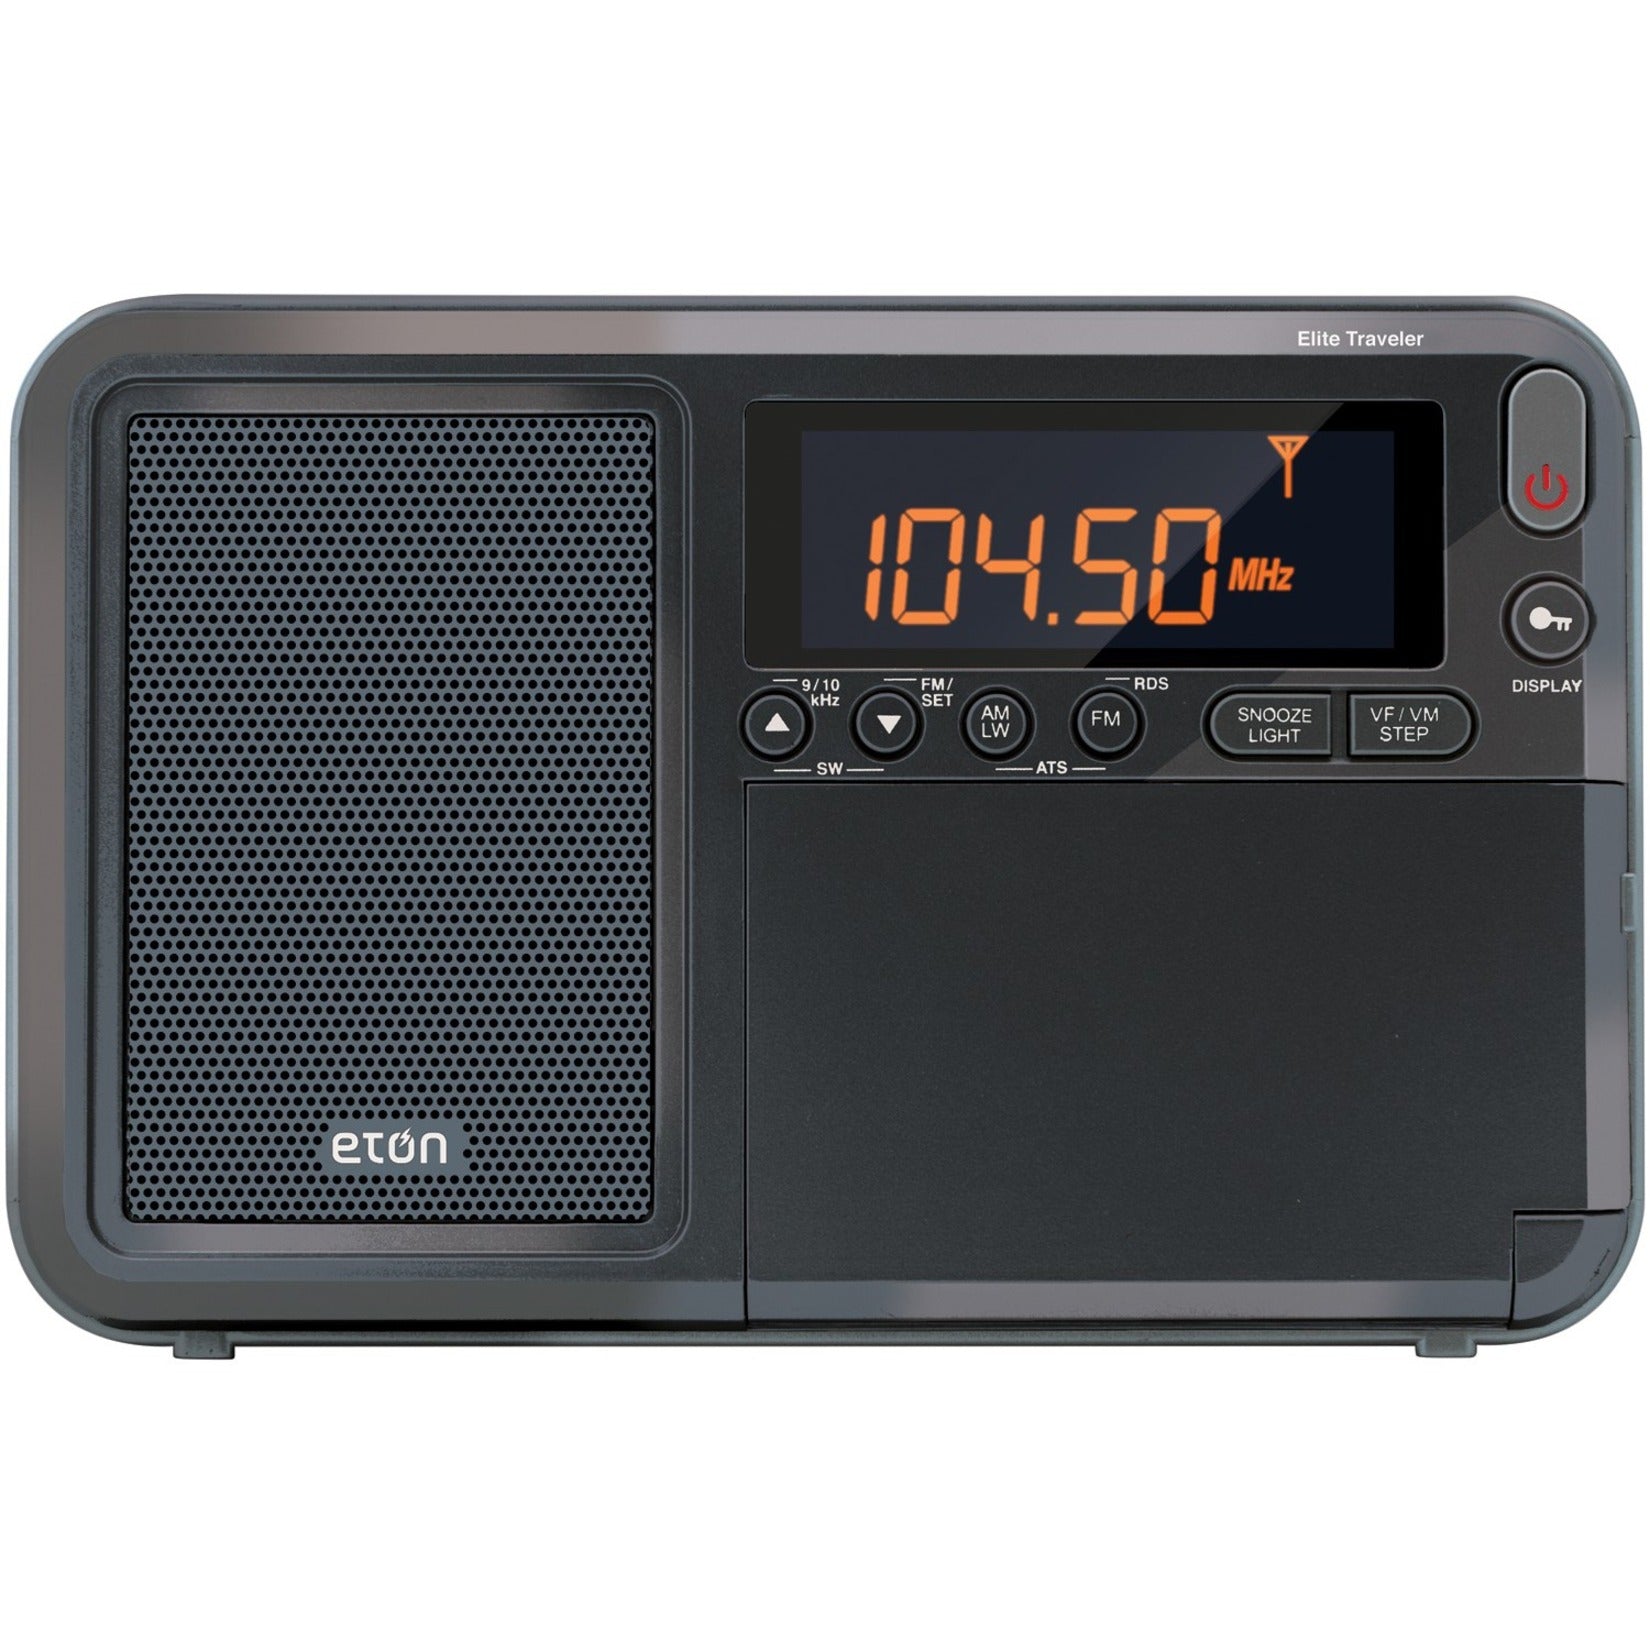 Eton NELITETRAVELLER Elite Traveler Radio, Analog/Digital Tuner, LCD Display, Built-in Antenna, Alarm, Sleep Timer, Telescopic Antenna, Gray